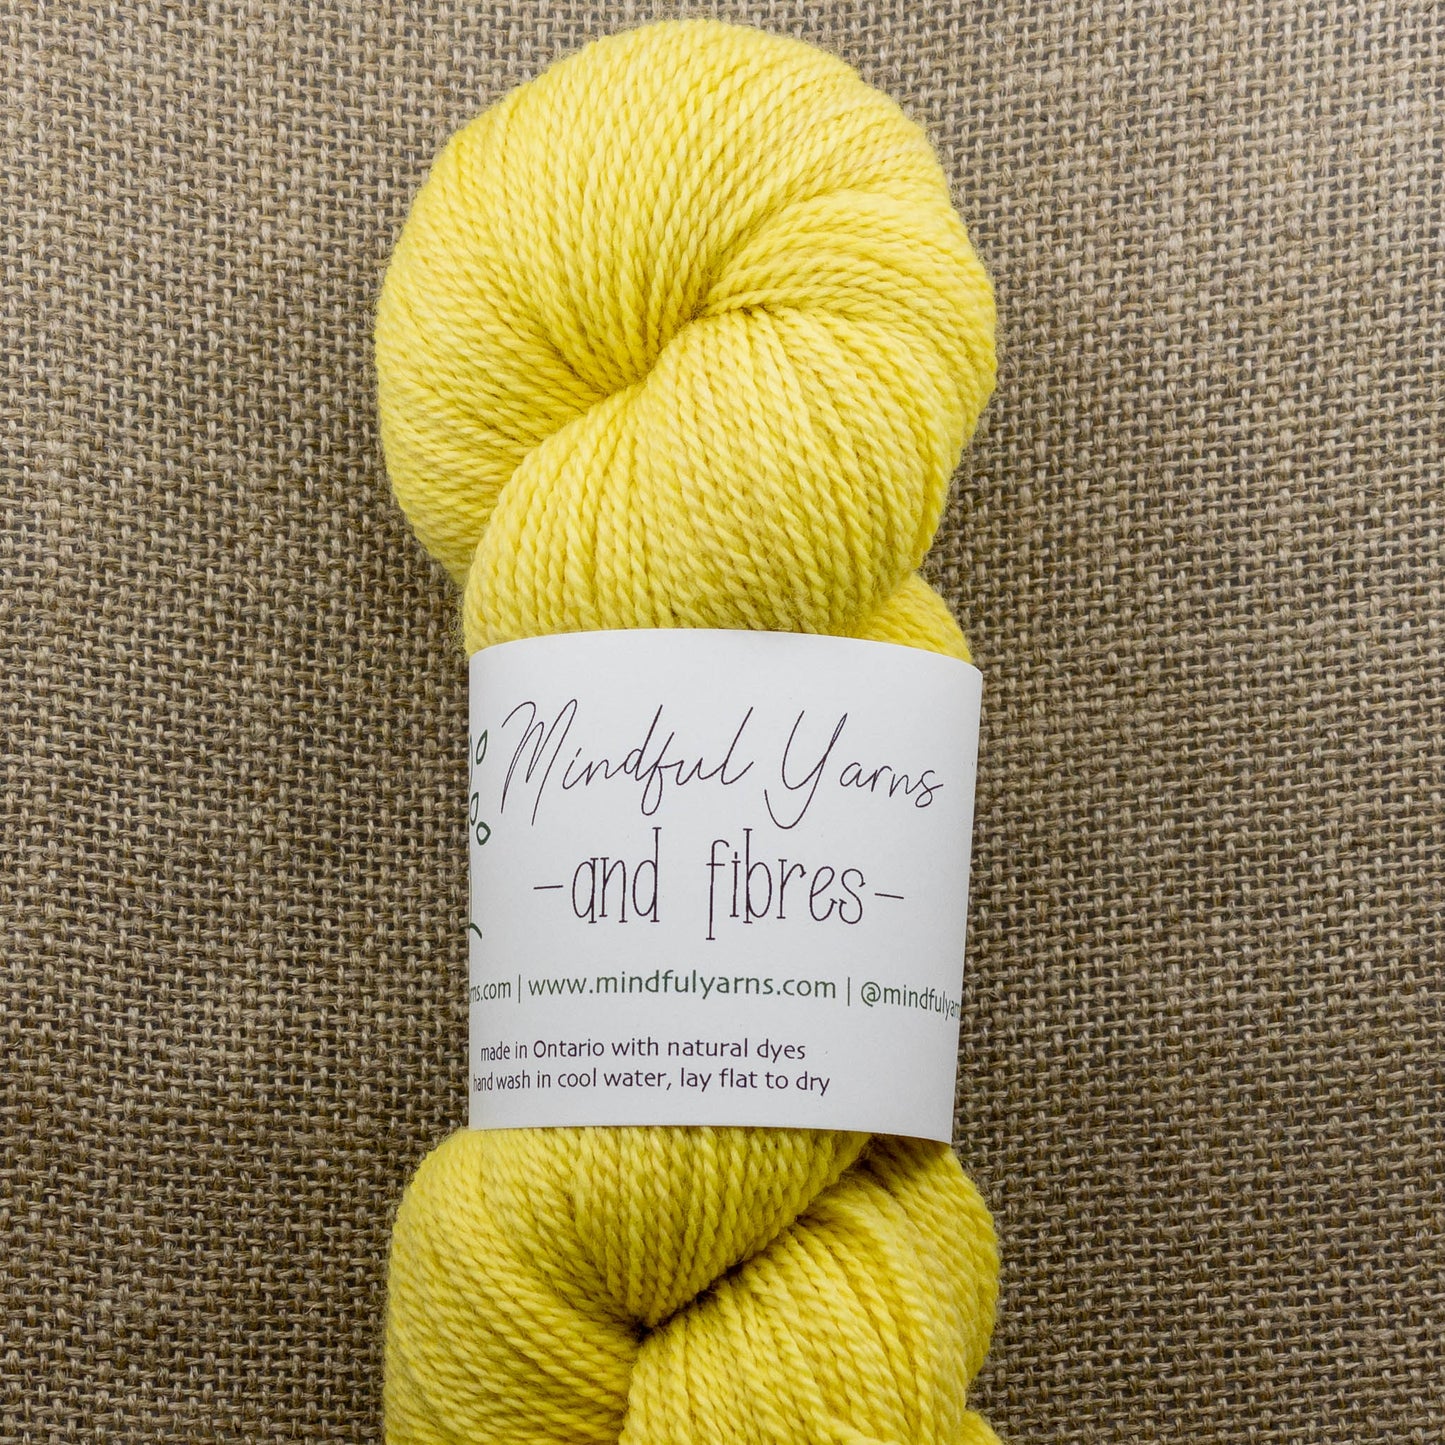 Organic Fingering Weight Wool - Mindful Yarns - Goldenrod medium